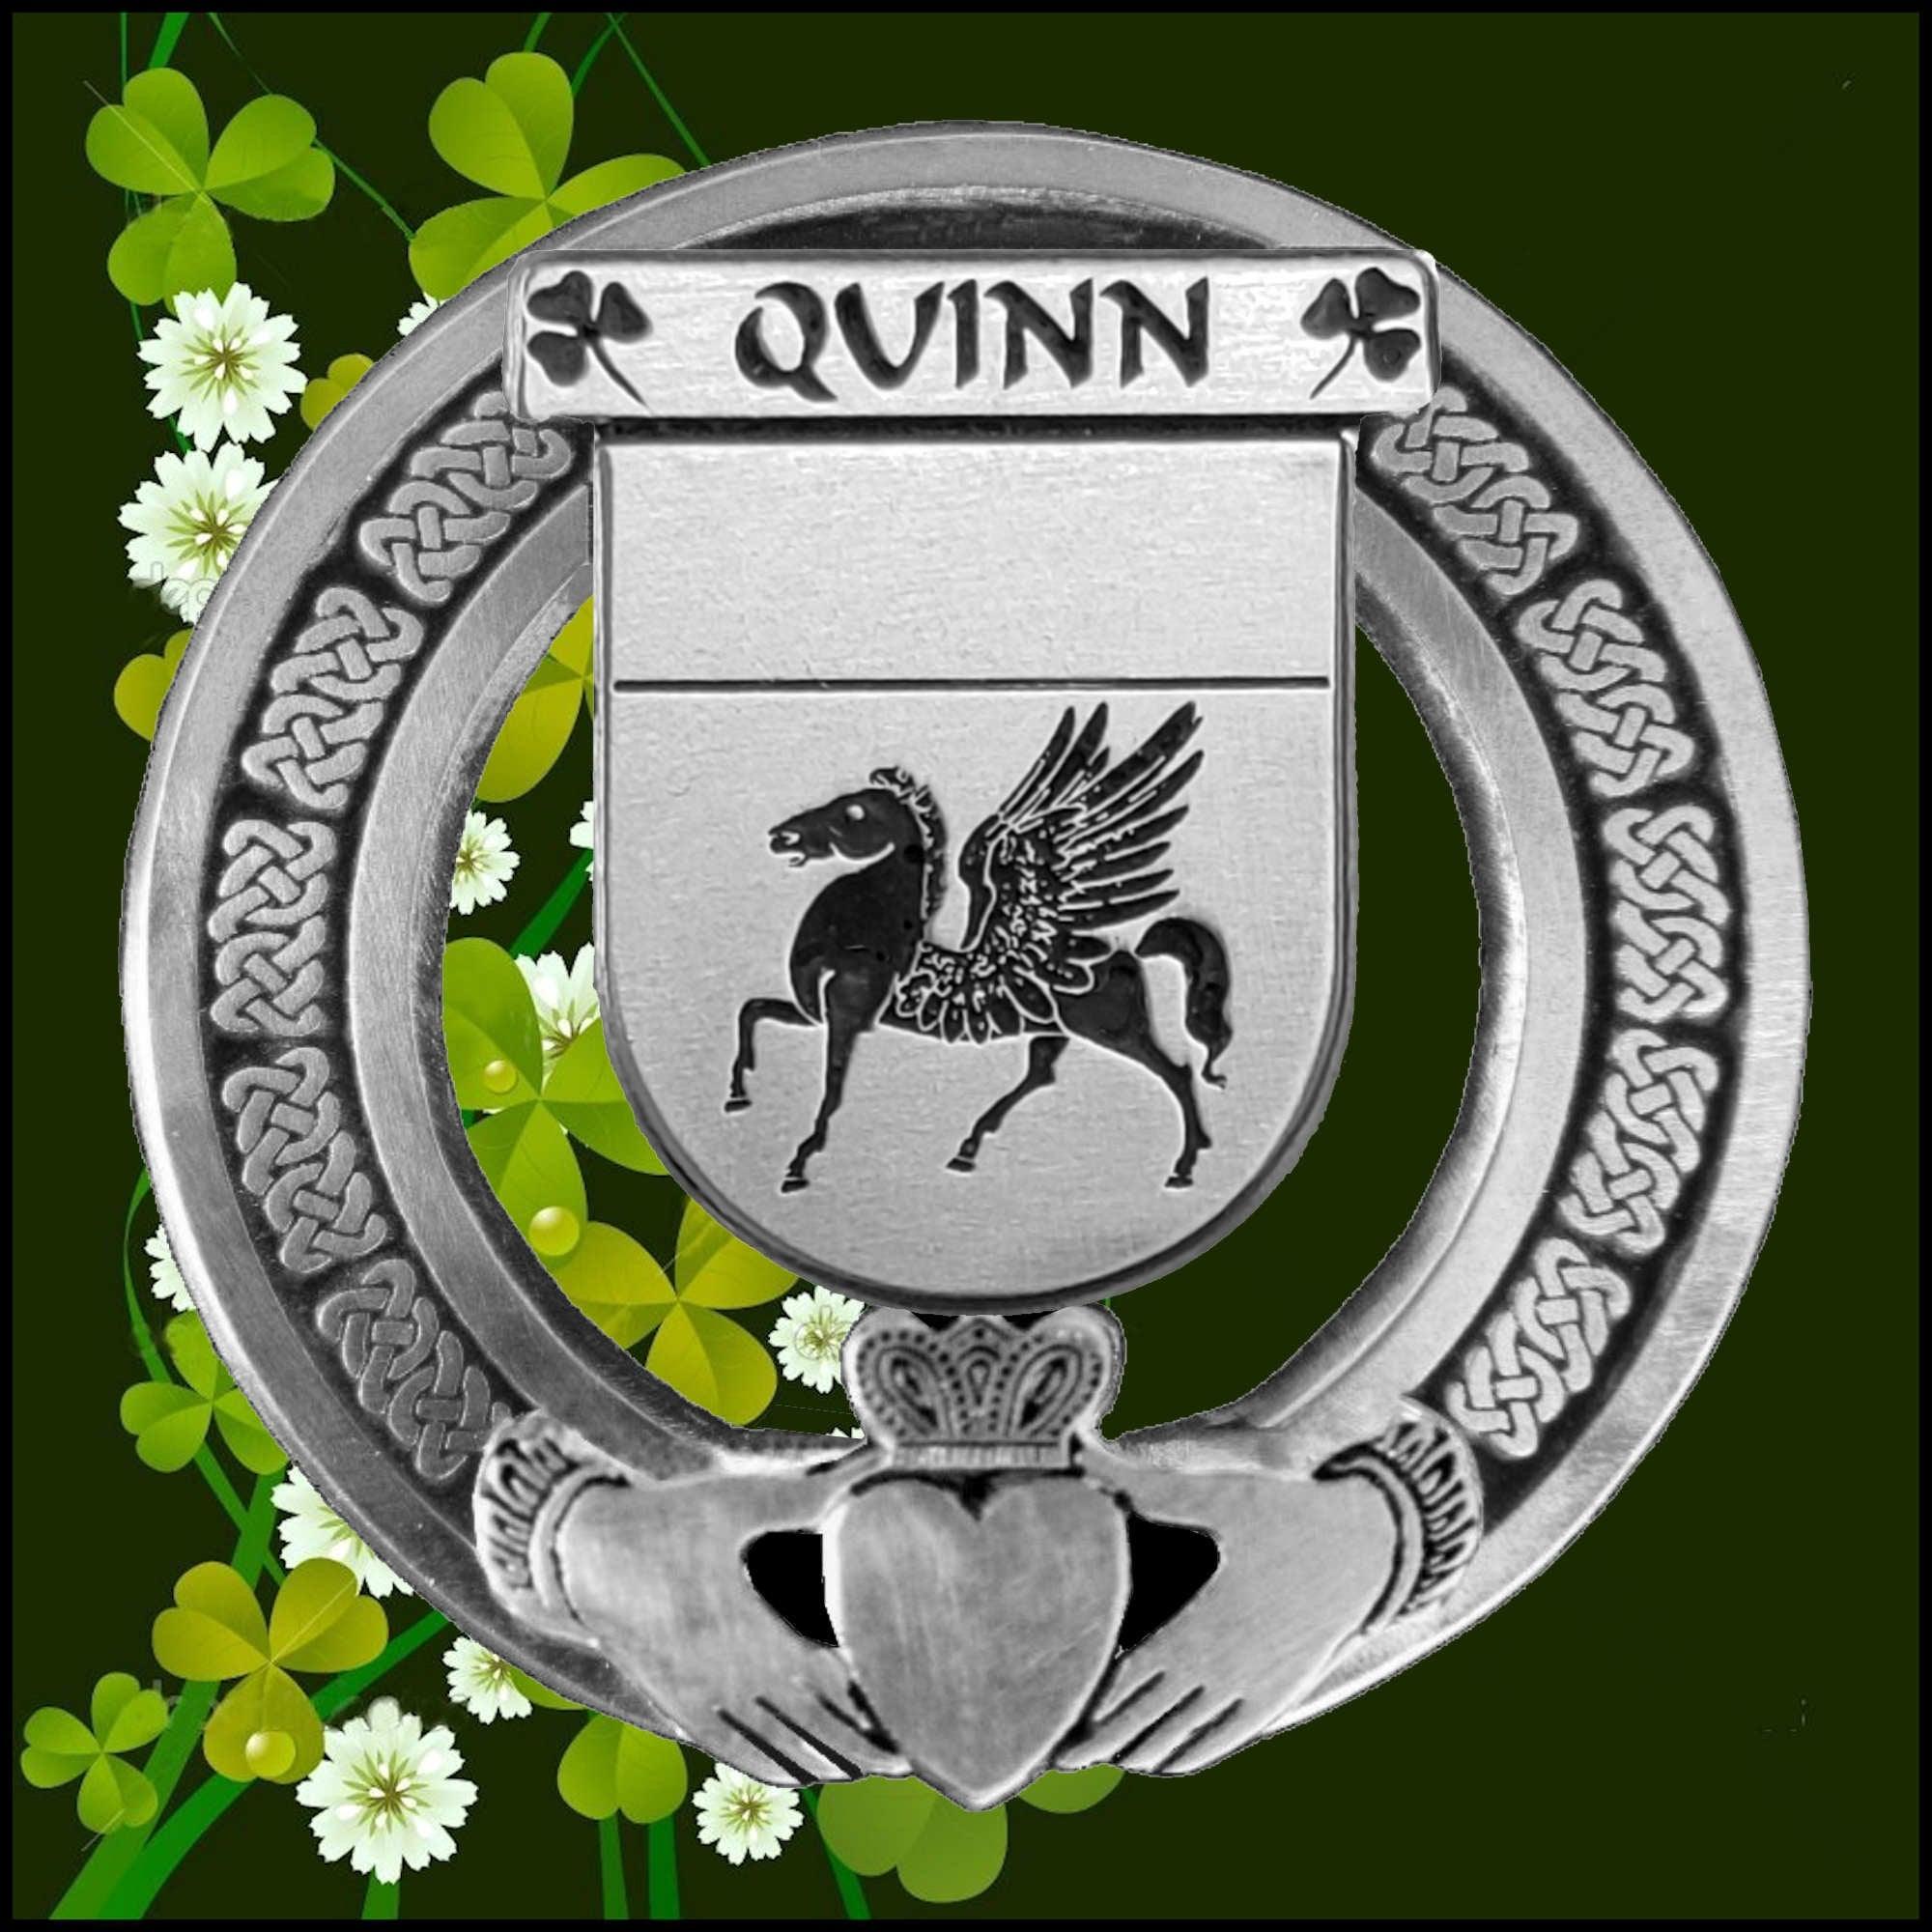 Quinn Irish Claddagh Coat of Arms Badge